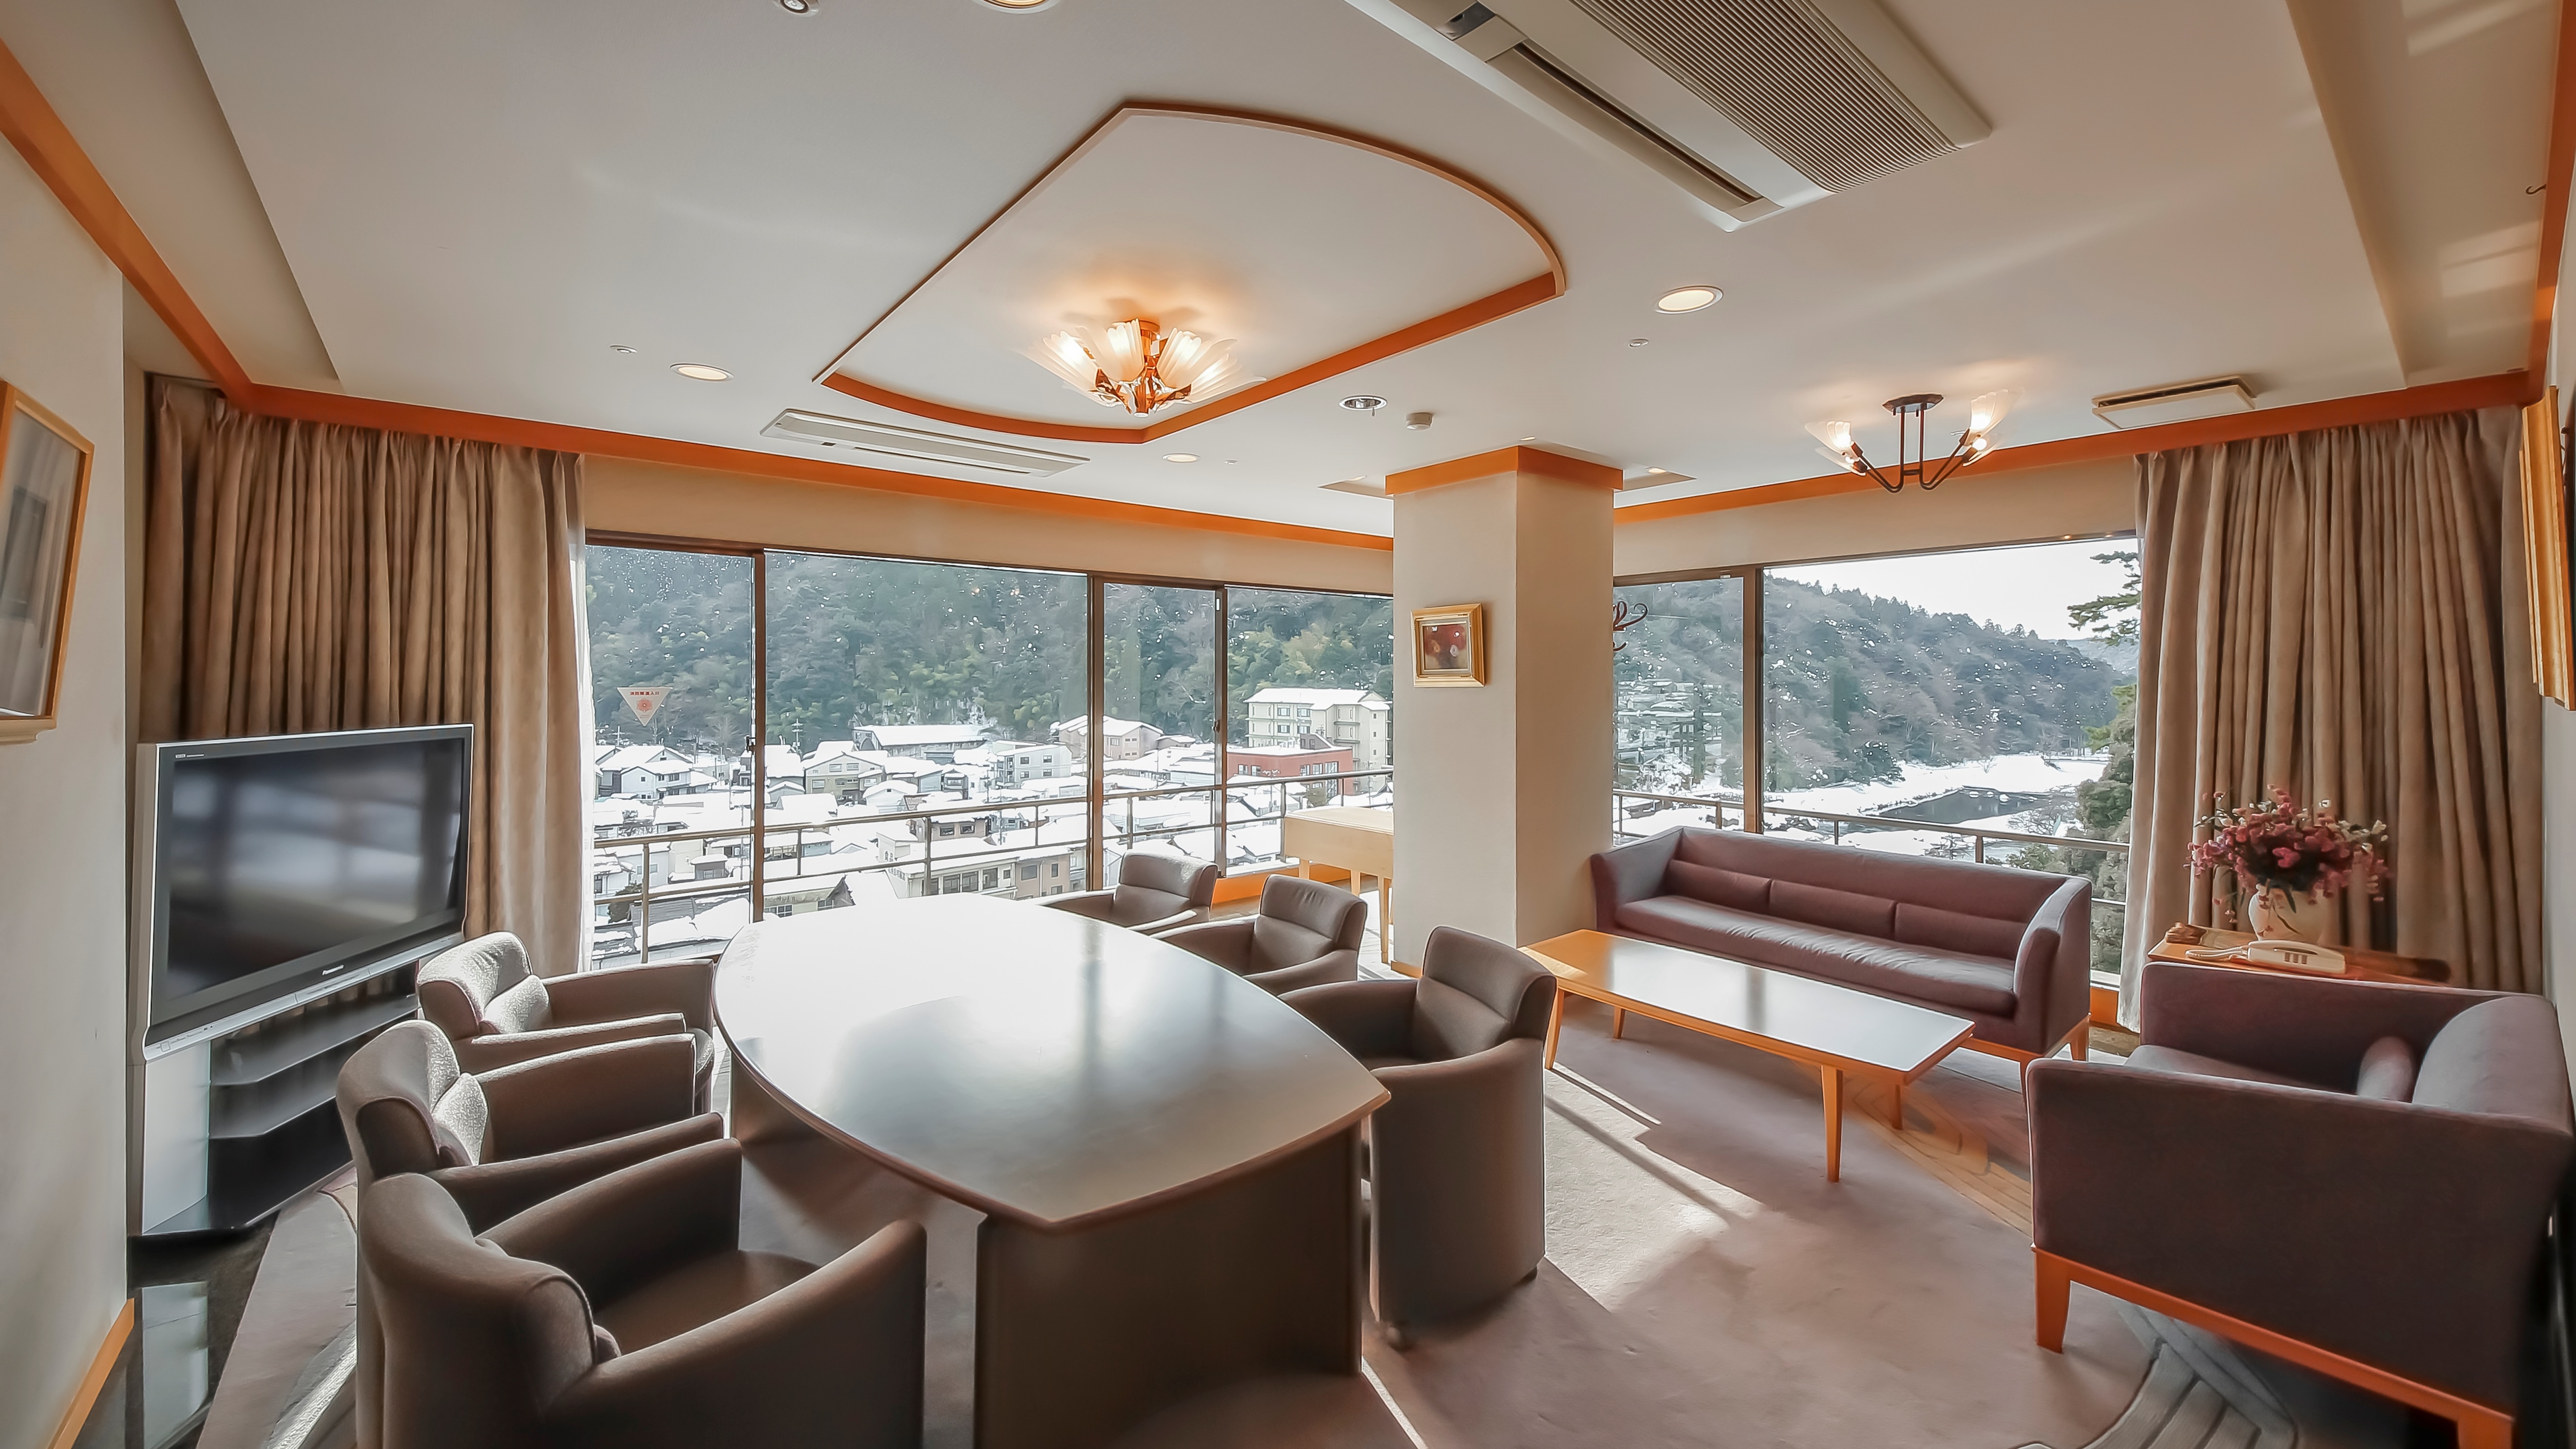 ■ Guest room with open-air bath [Sakuragawa]